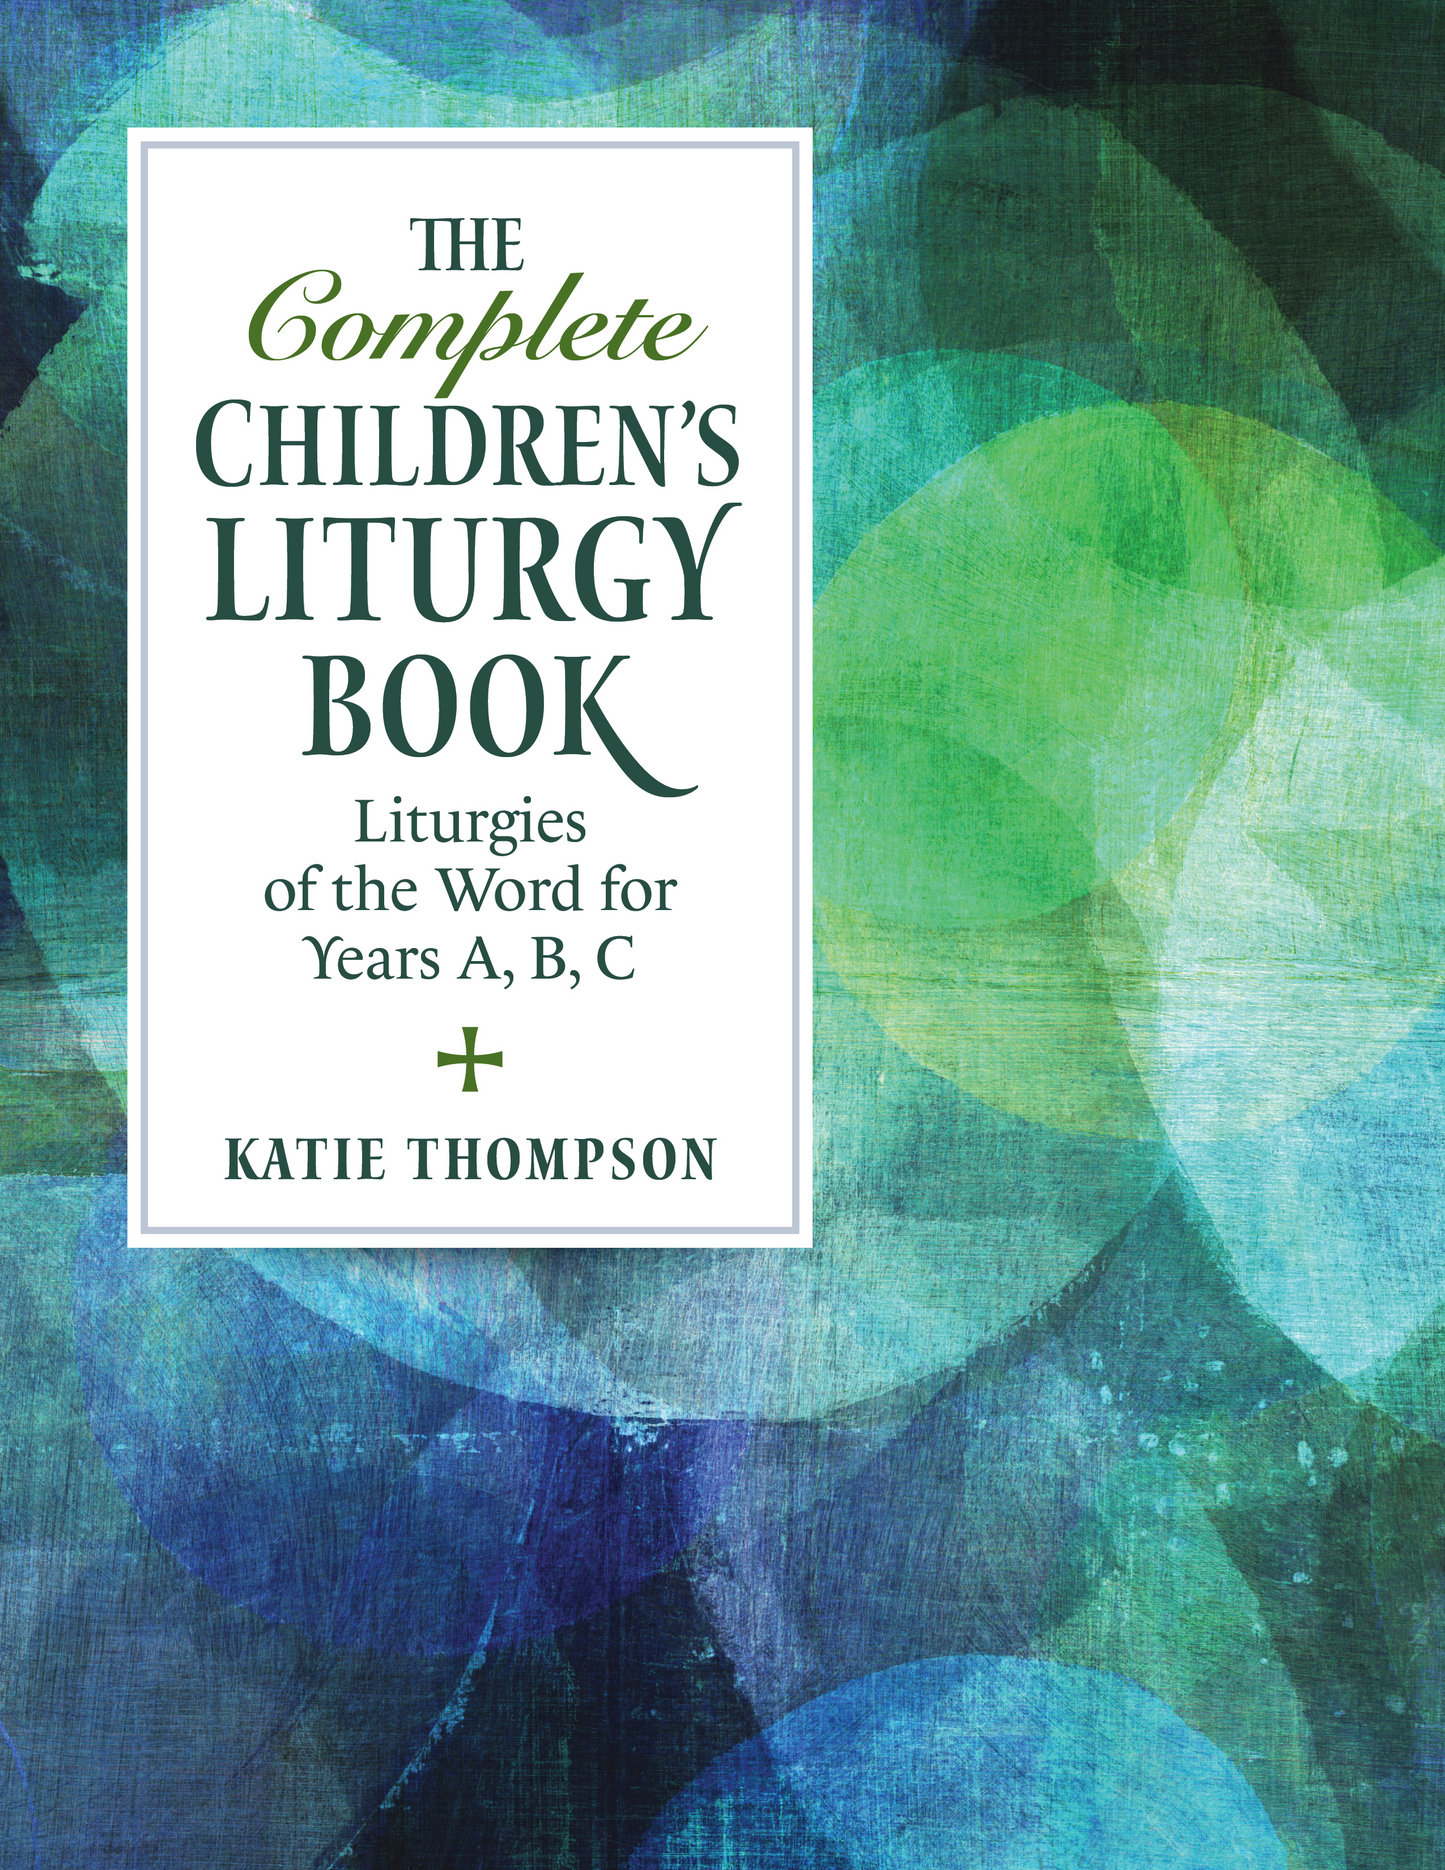 The Complete Children’s Liturgy Book